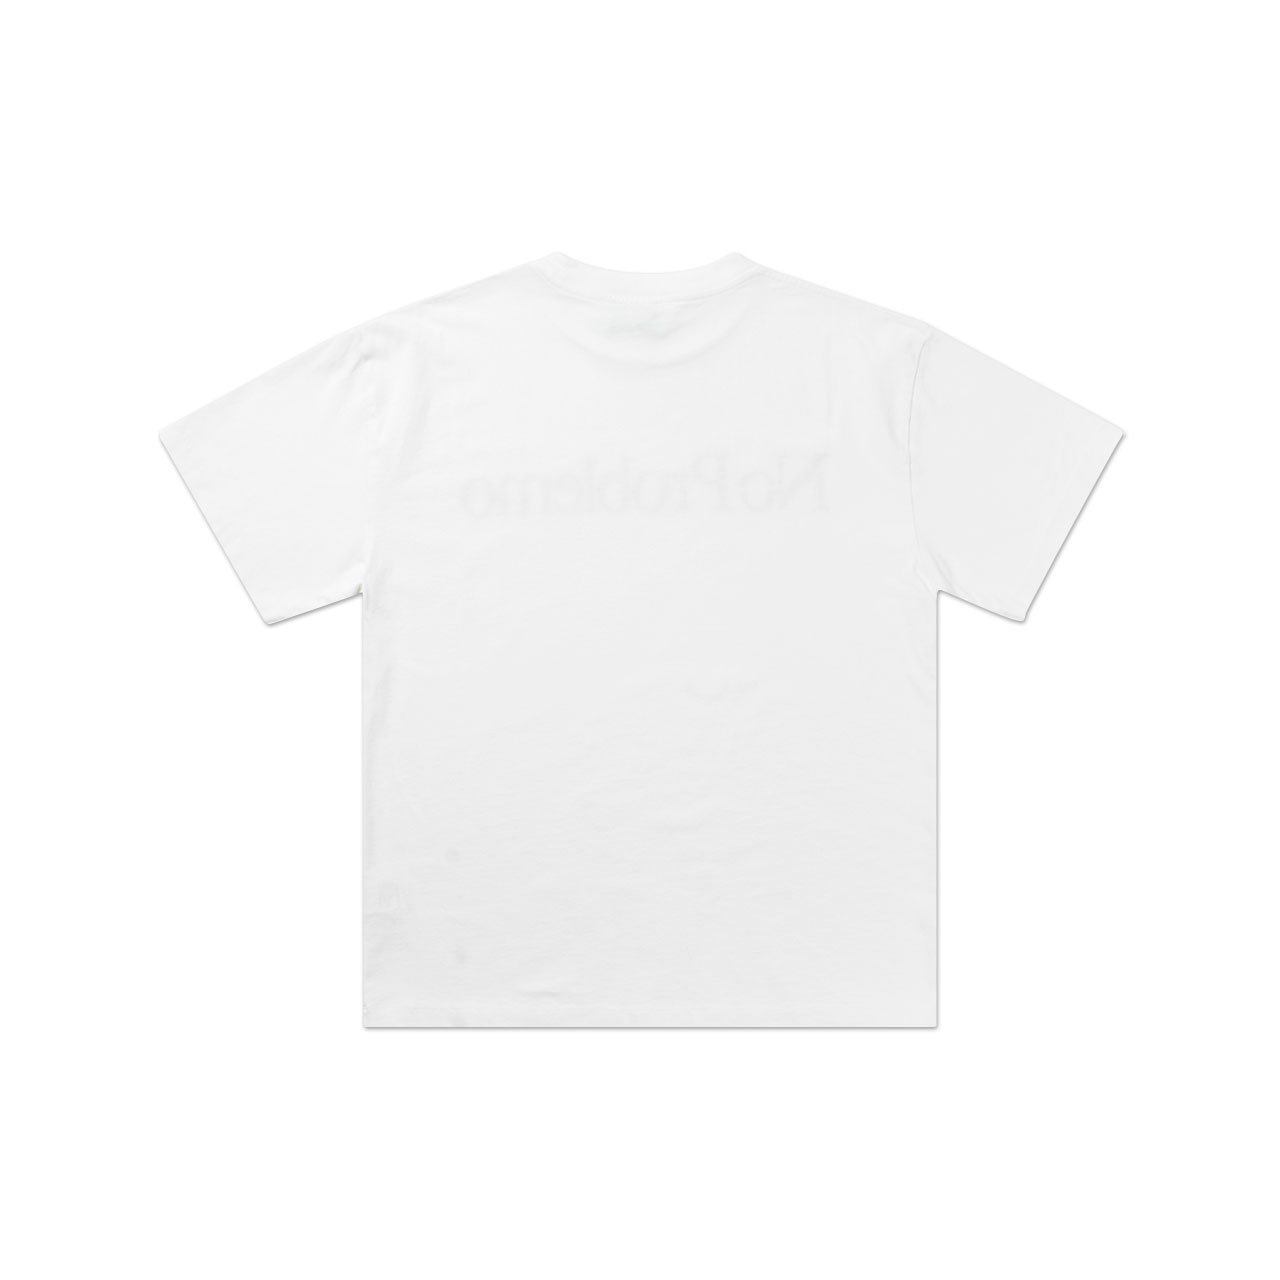 aries no problemo t-shirt (white) - sqar60002 - a.plus - Image - 2